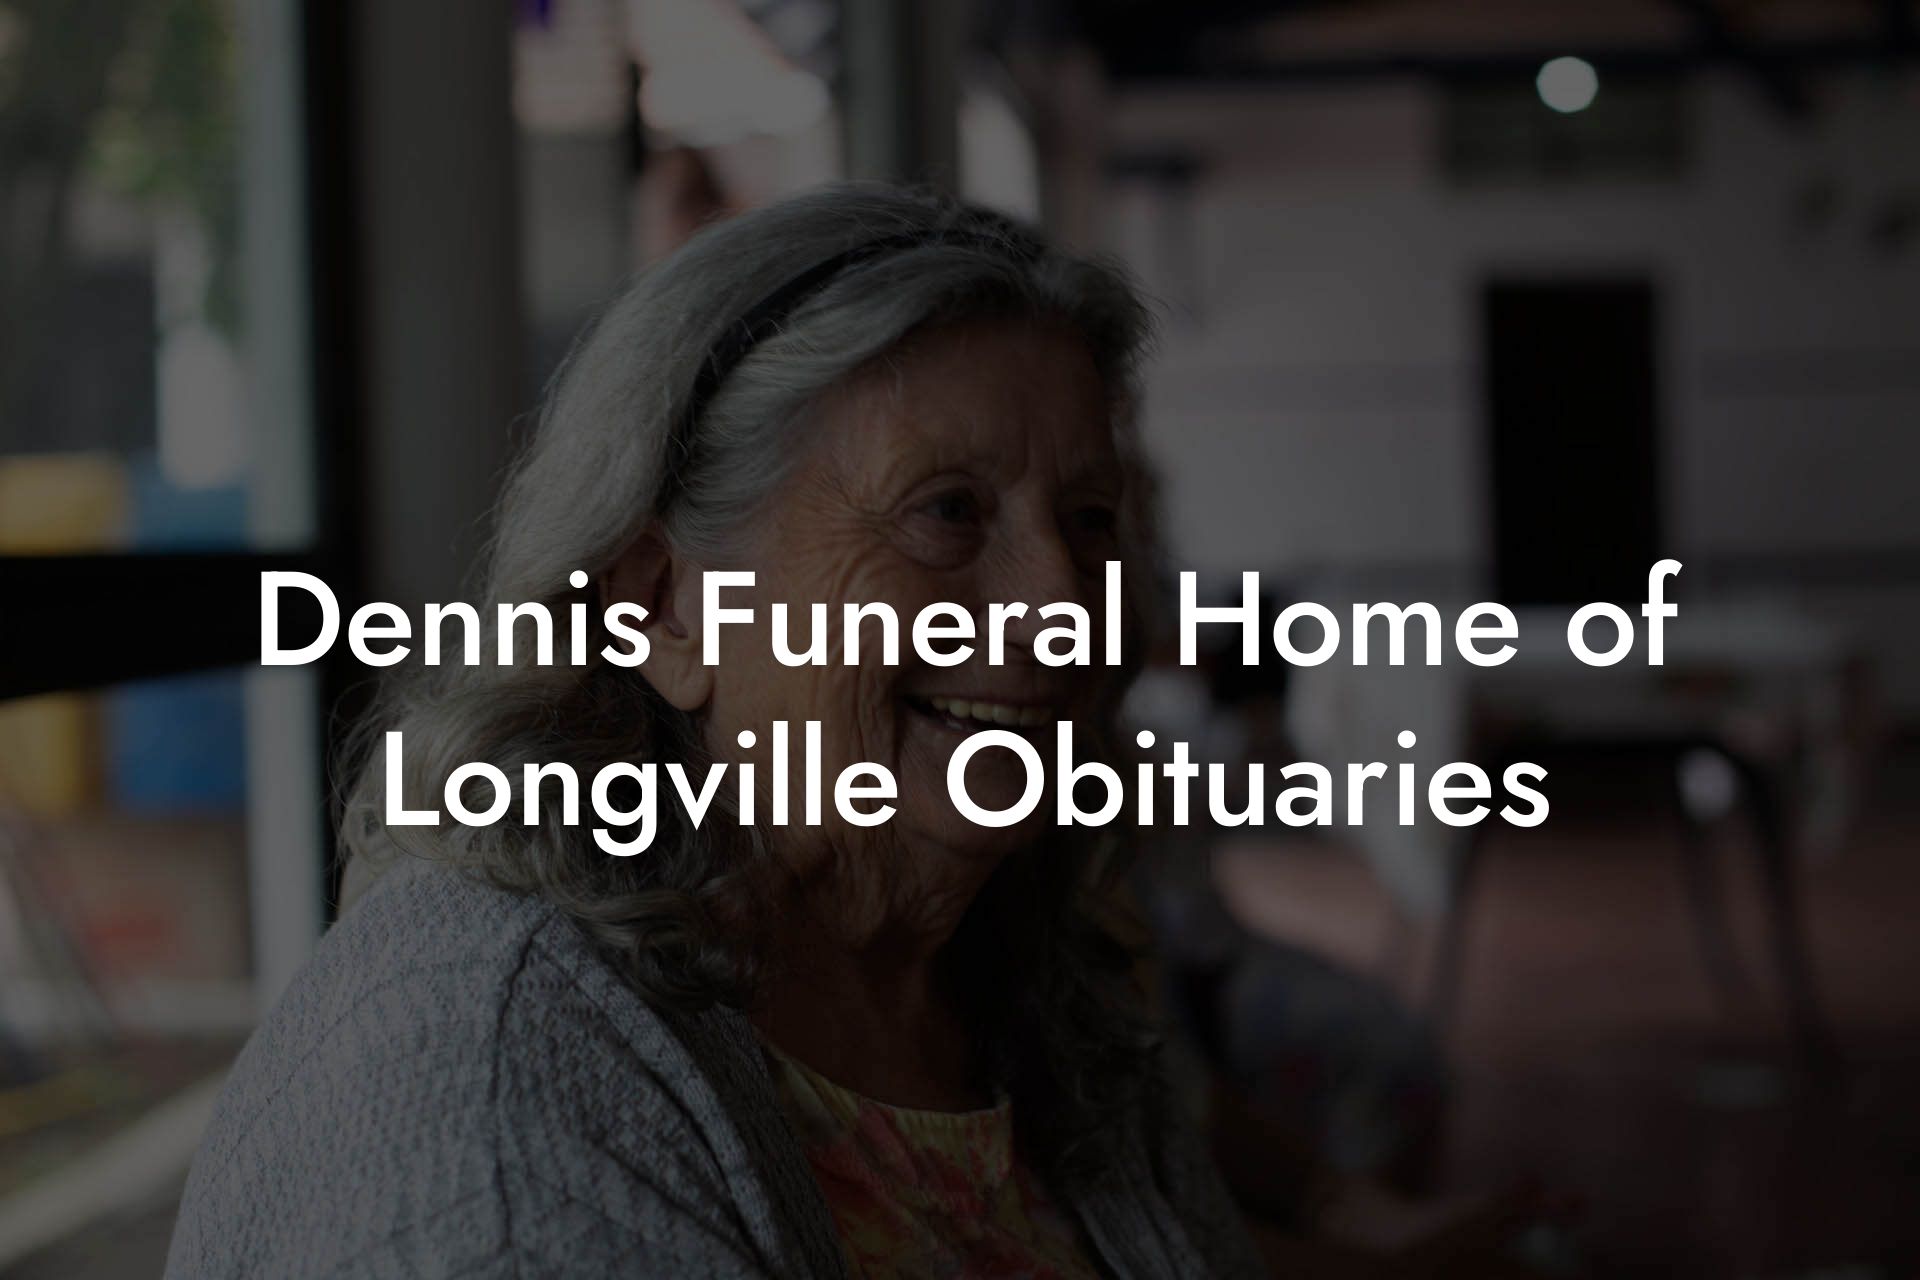 Dennis Funeral Home of Longville Obituaries